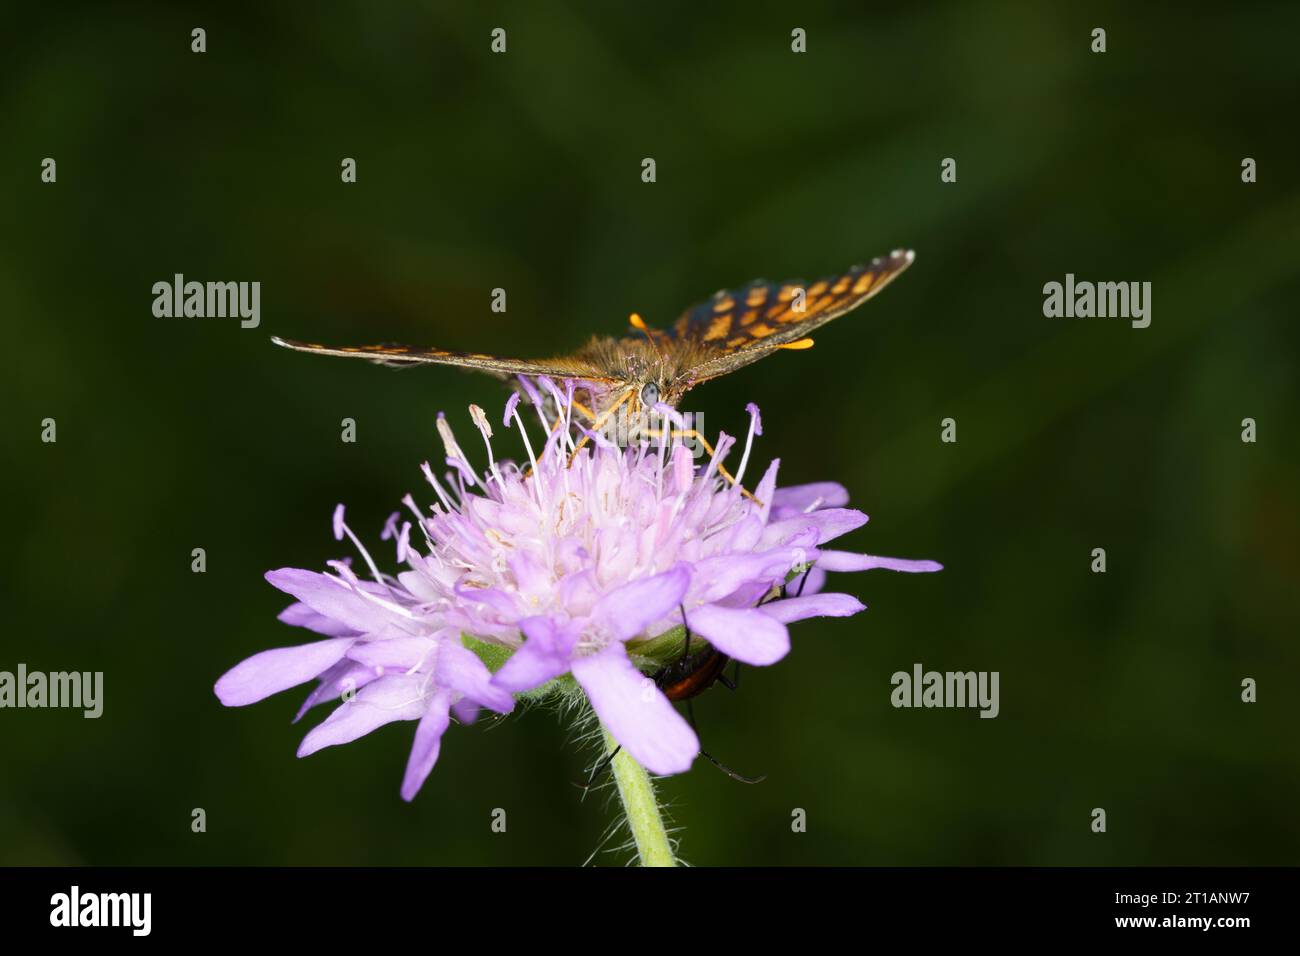 Melitaea diamina Family Nymphalidae Genus Melitaea False heath fritillary butterfly wild nature insect photography, picture, wallpaper Stock Photo